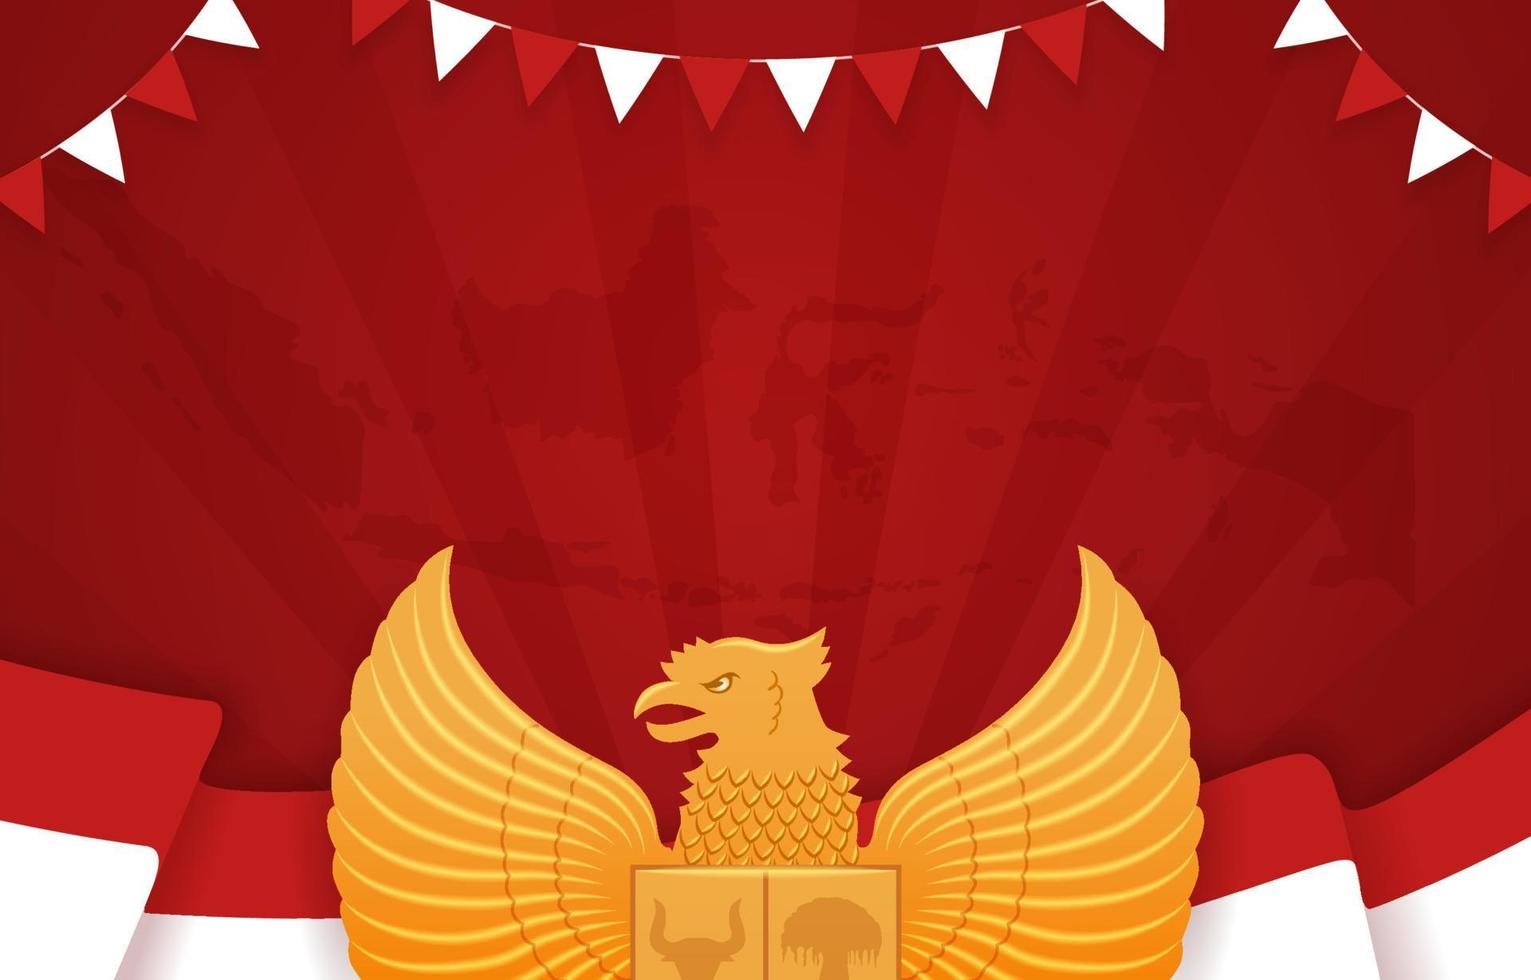 Hari Pancasila Background With Garuda And Indonesian Flag 7062179